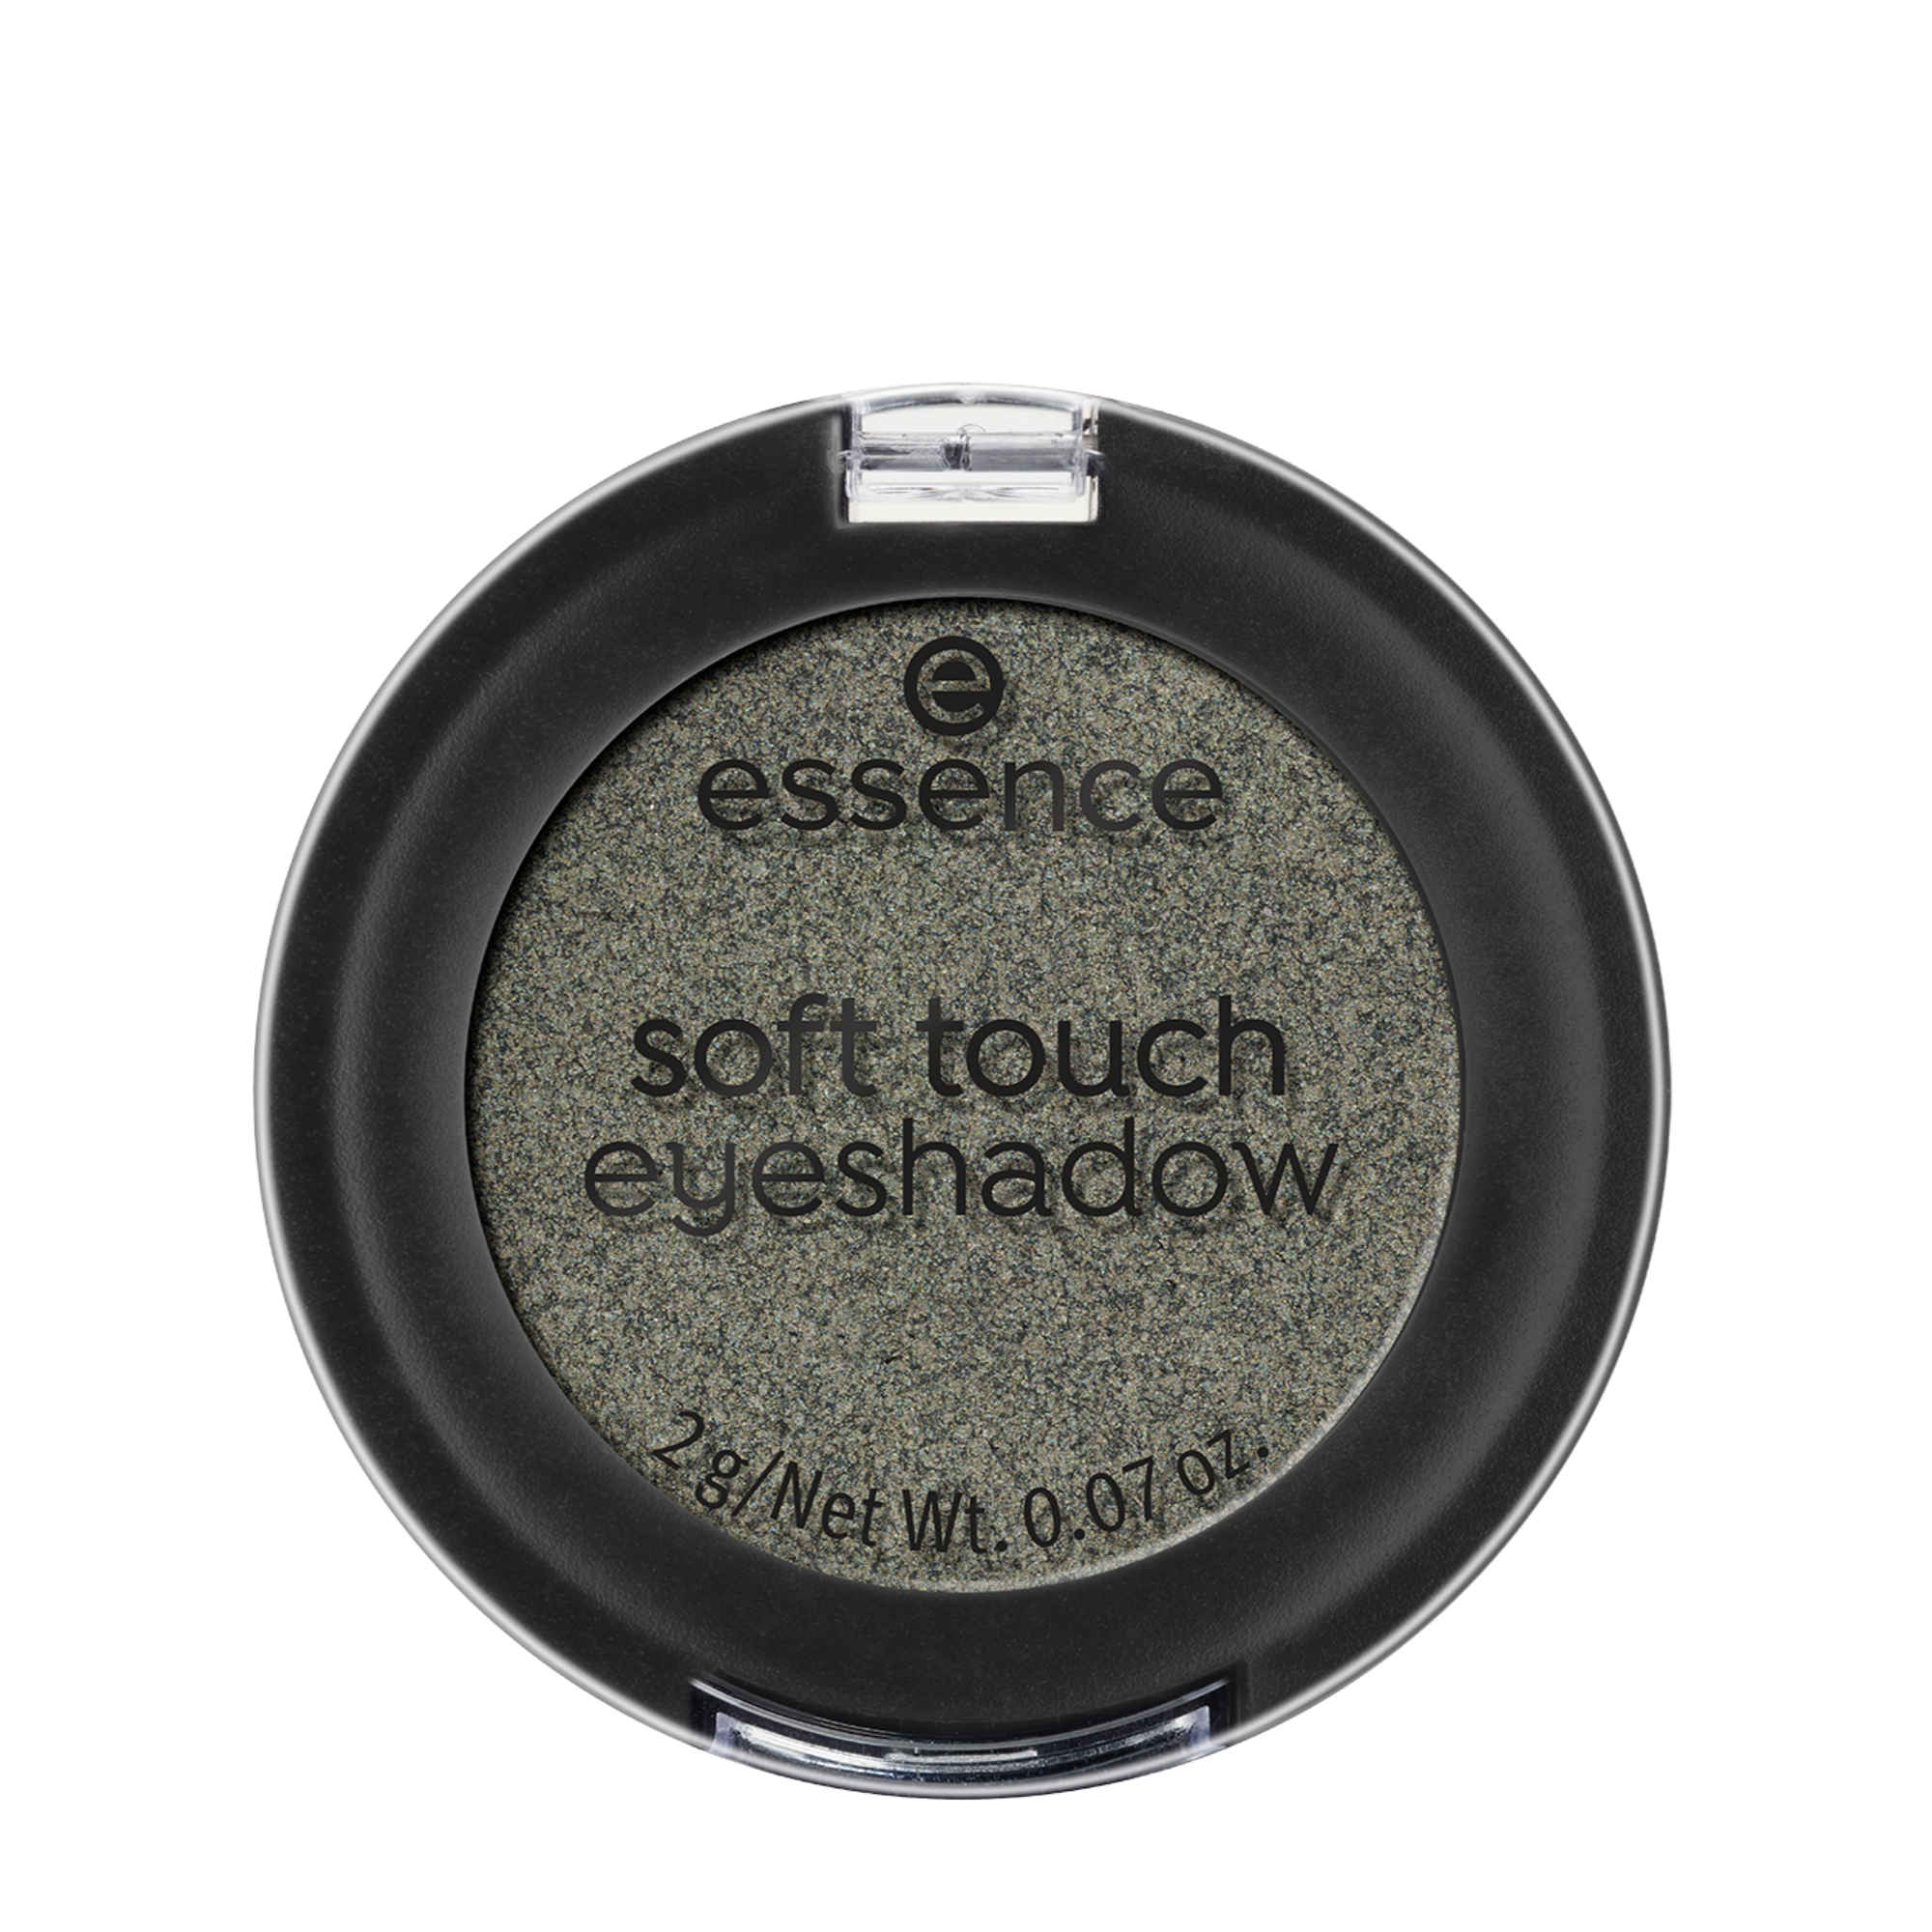 soft touch eyeshadow